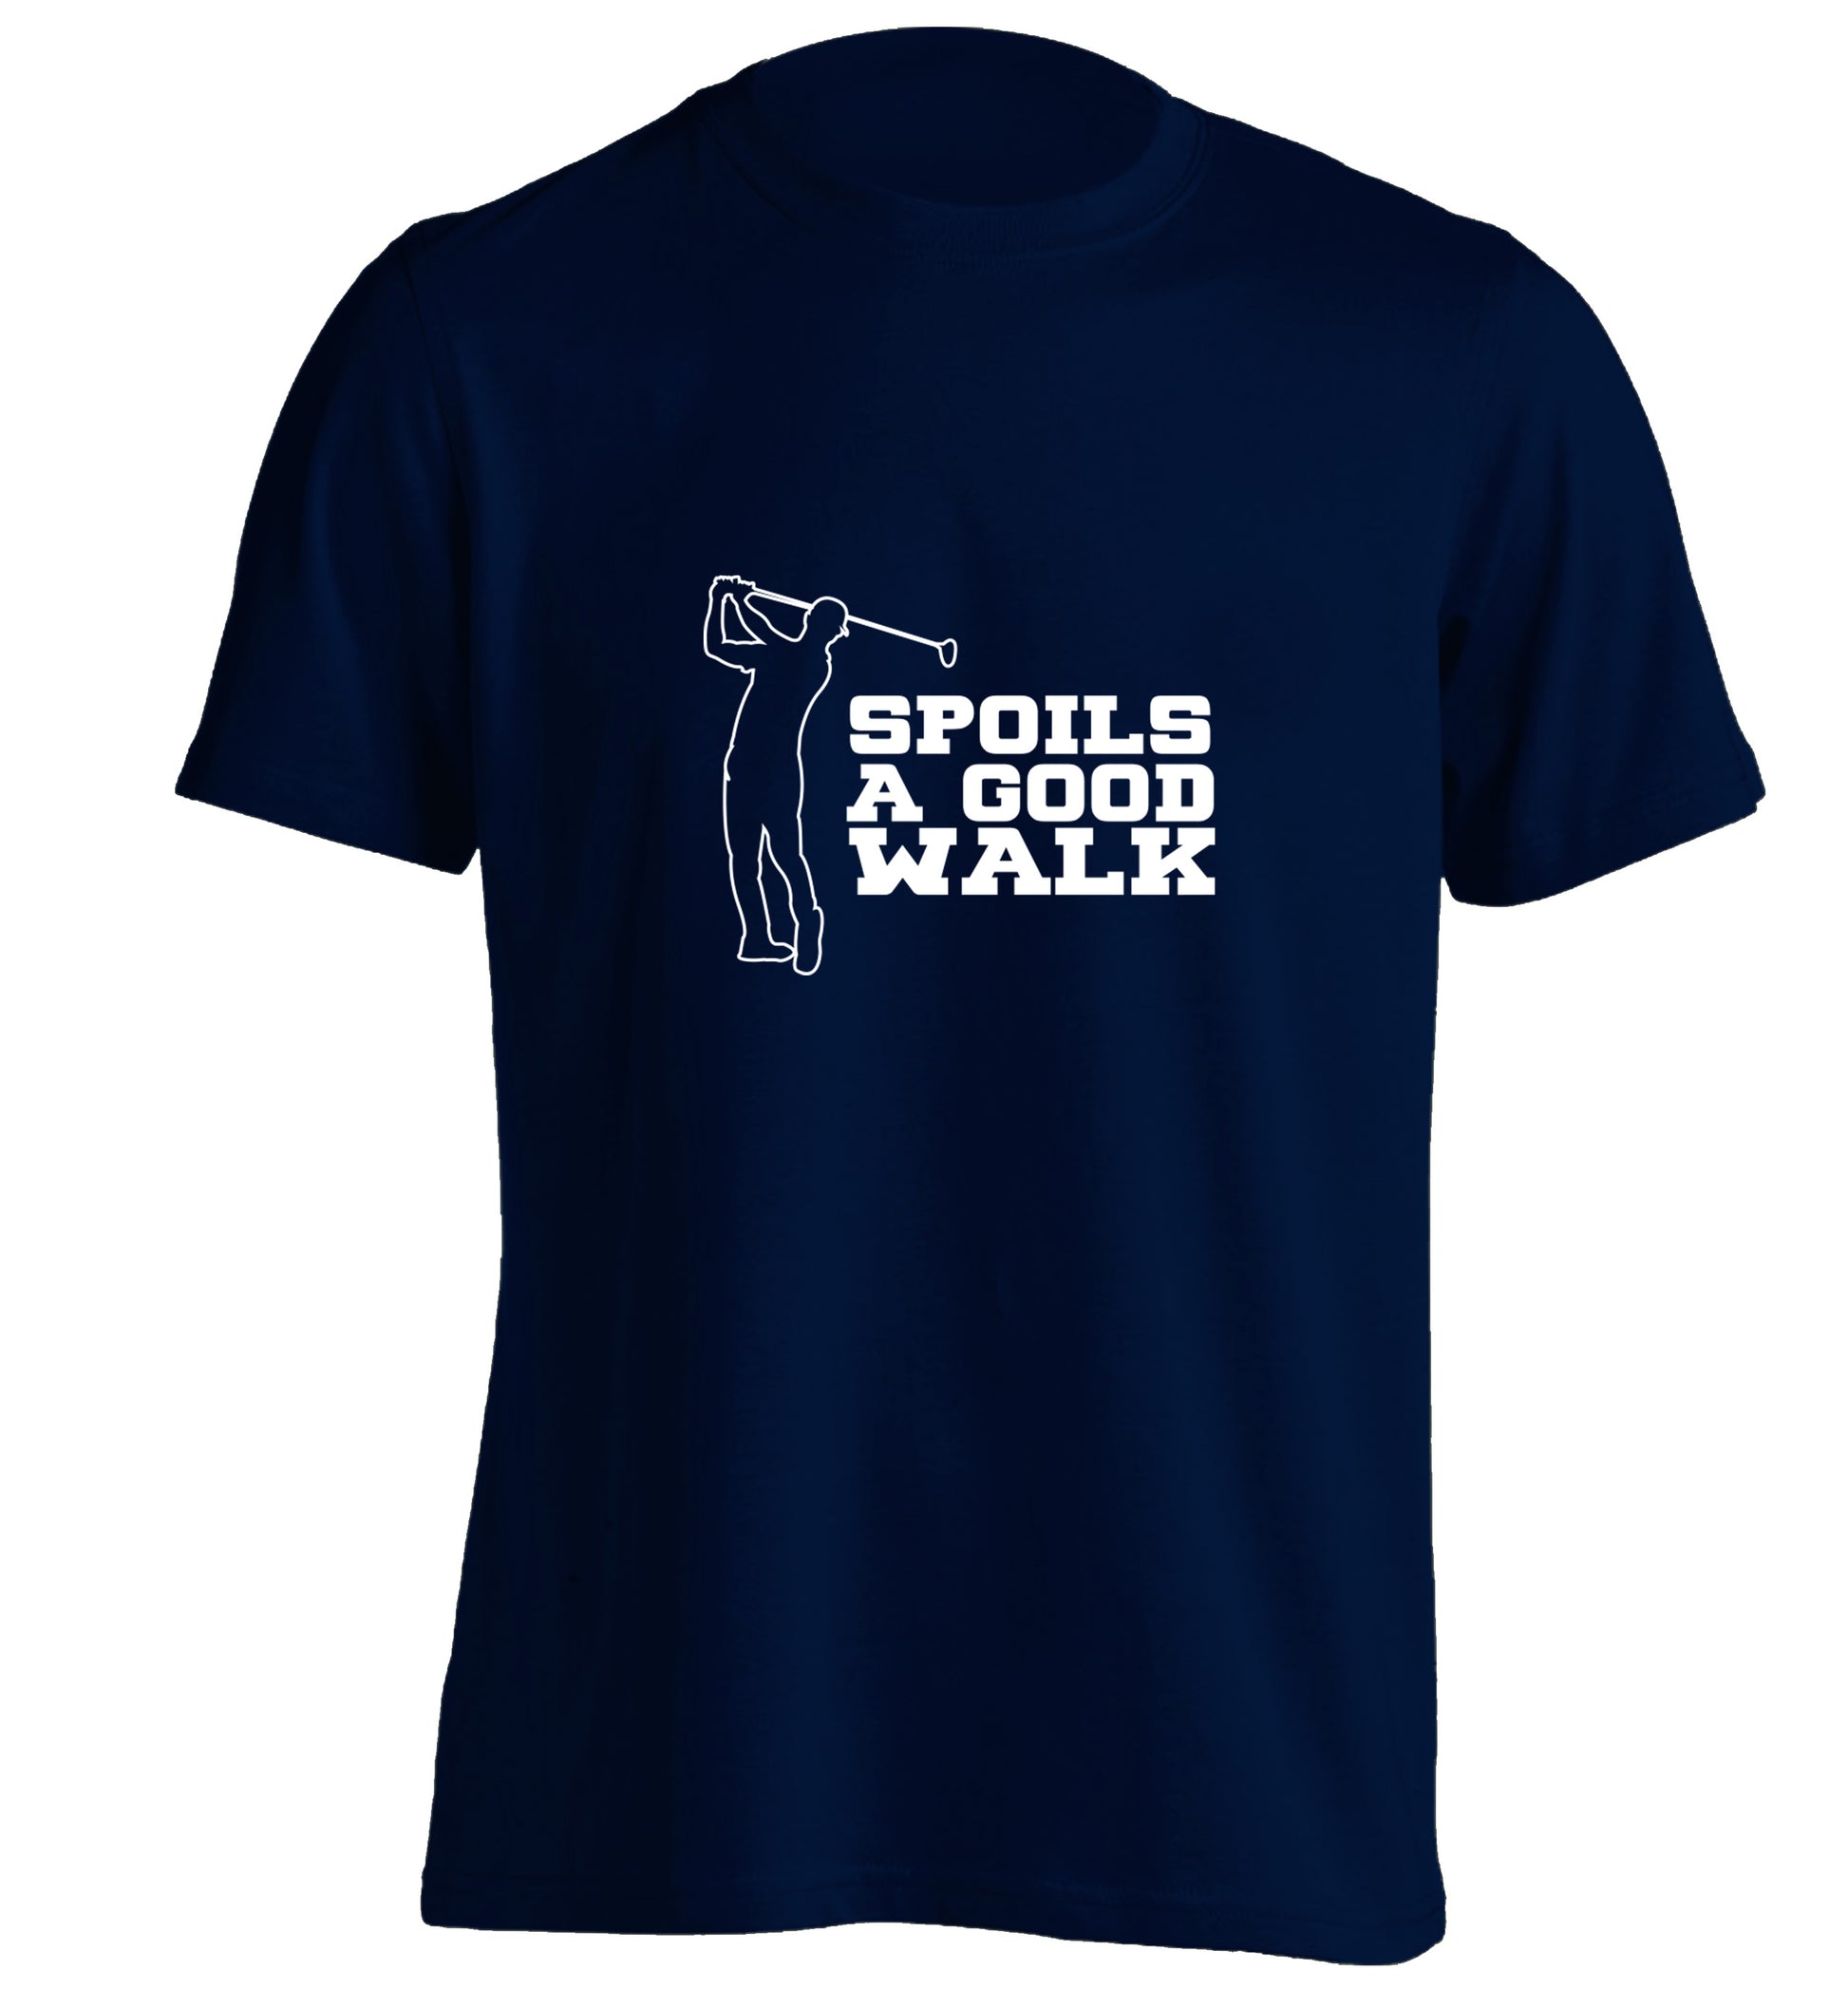 Golf spoils a good walk adults unisex navy Tshirt 2XL